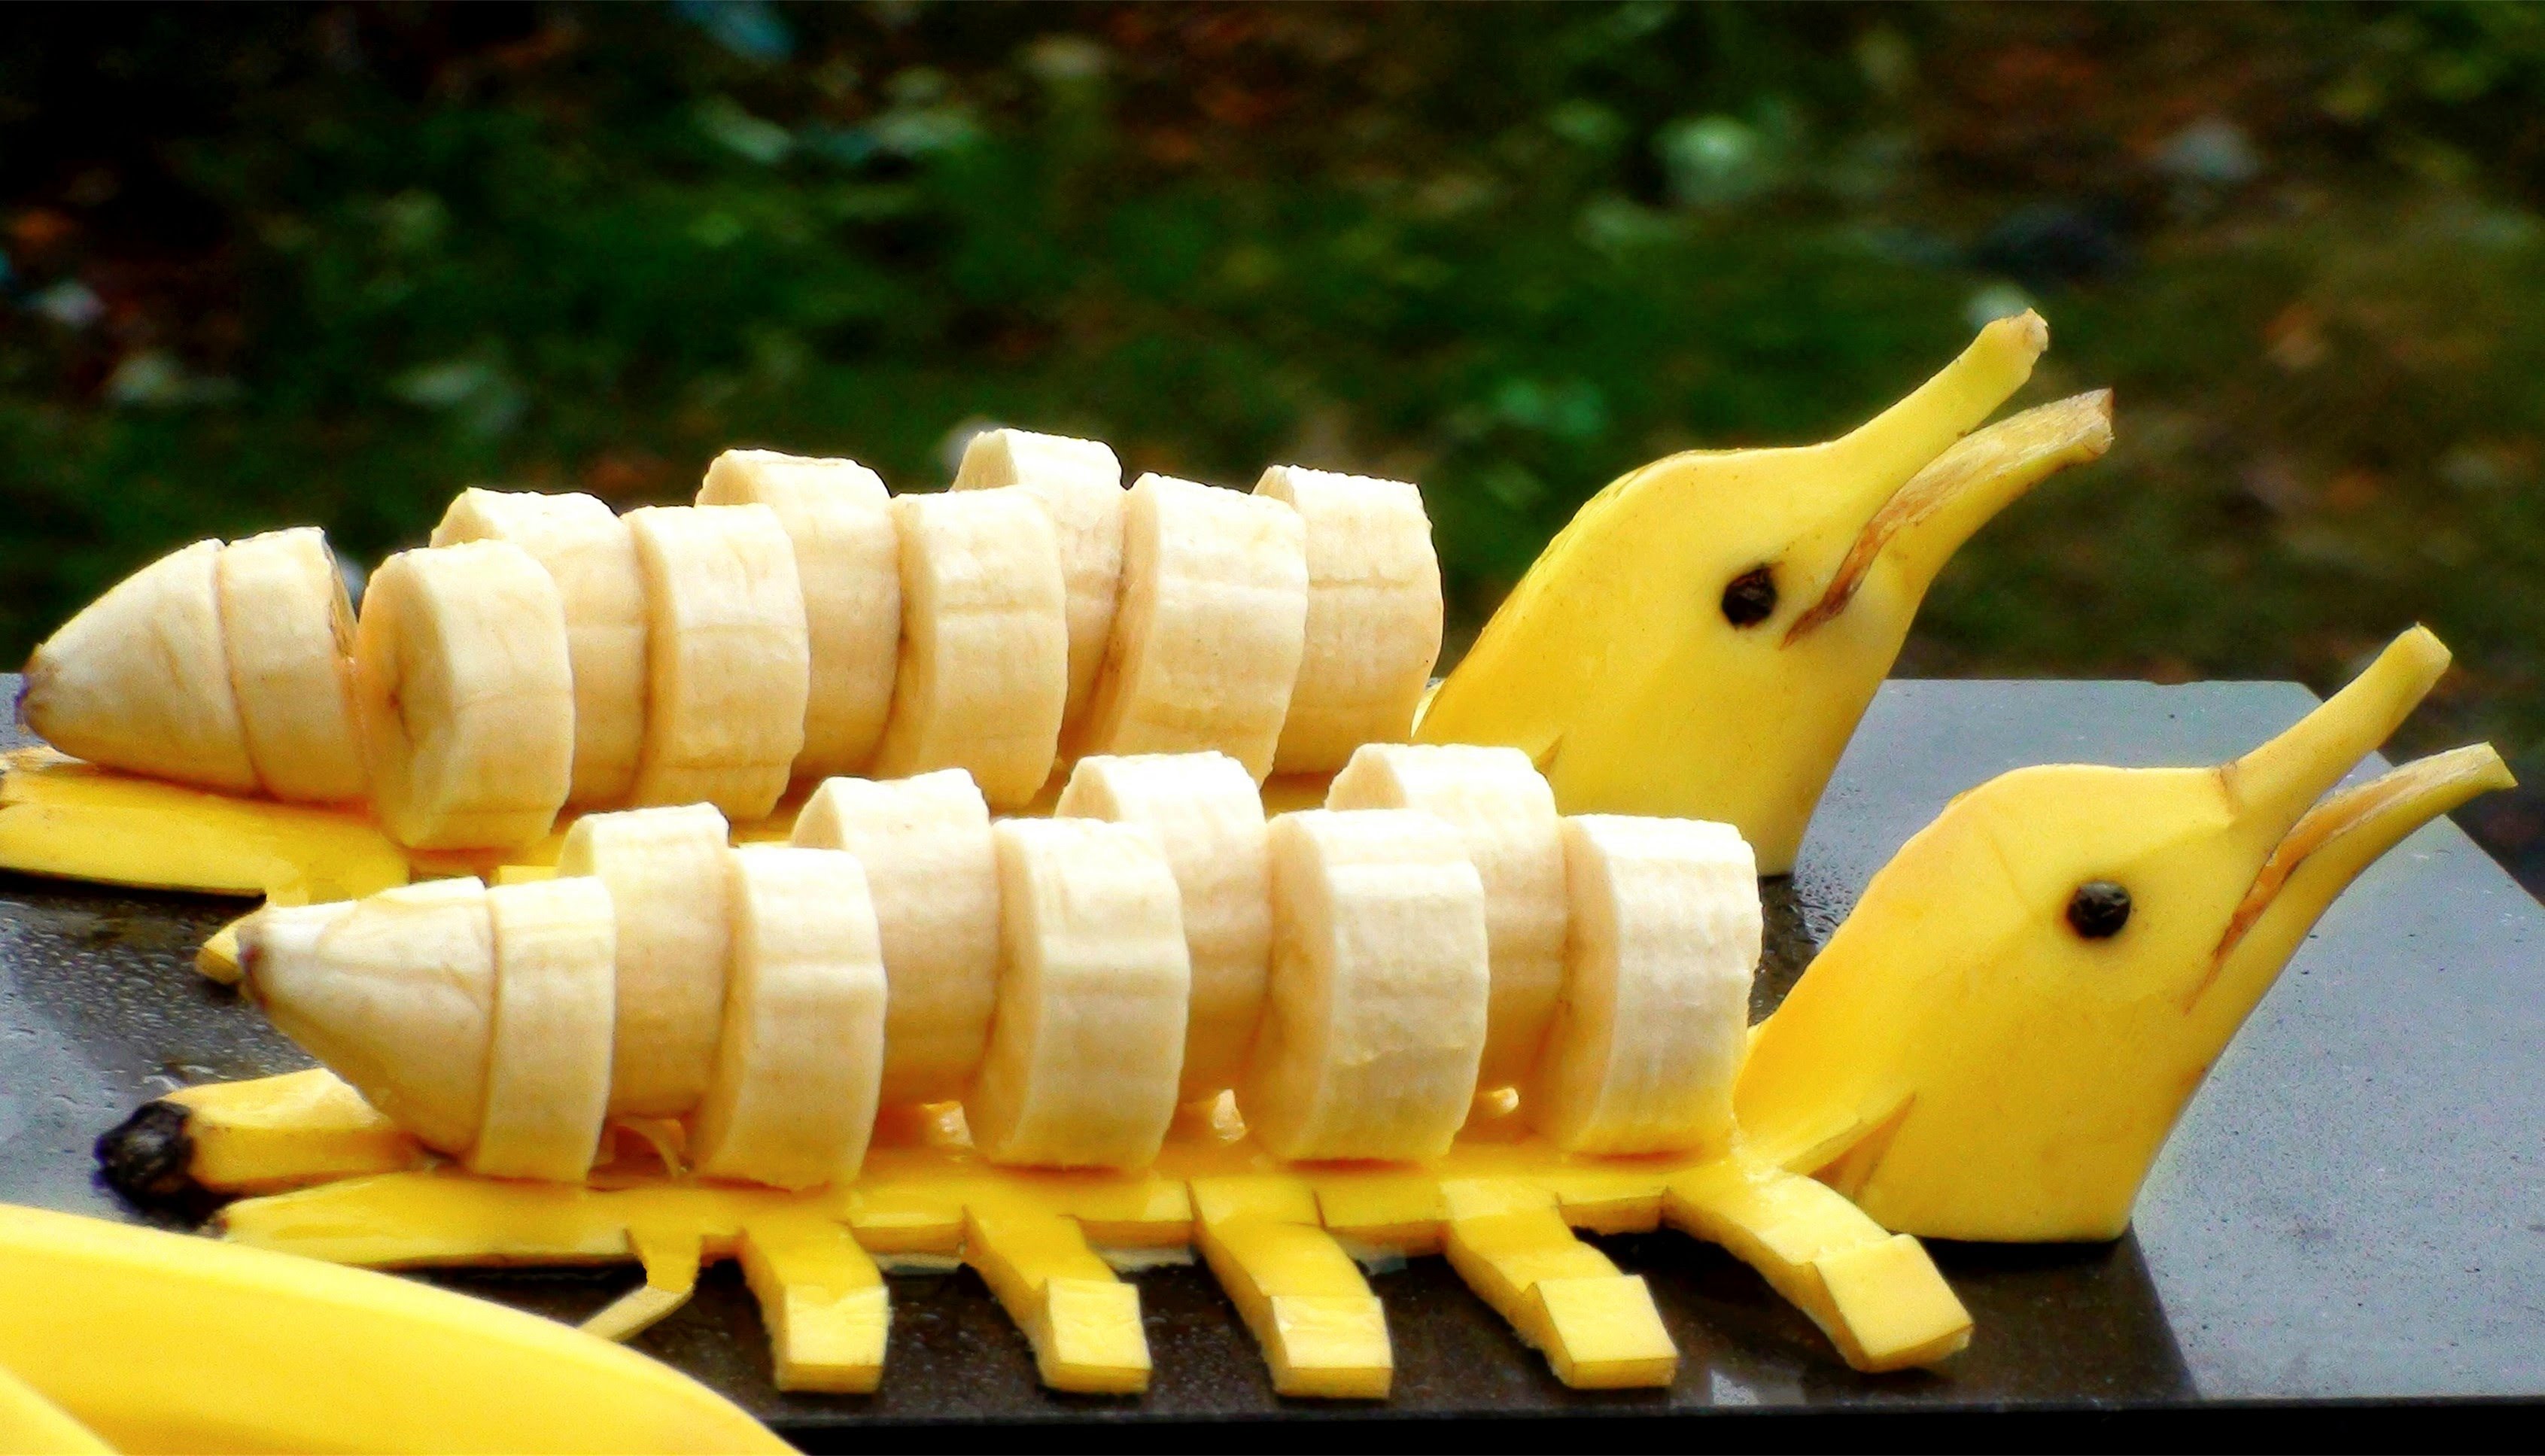 How to Make Banana Decoration | Banana Art | Fruit Carving Banana ...